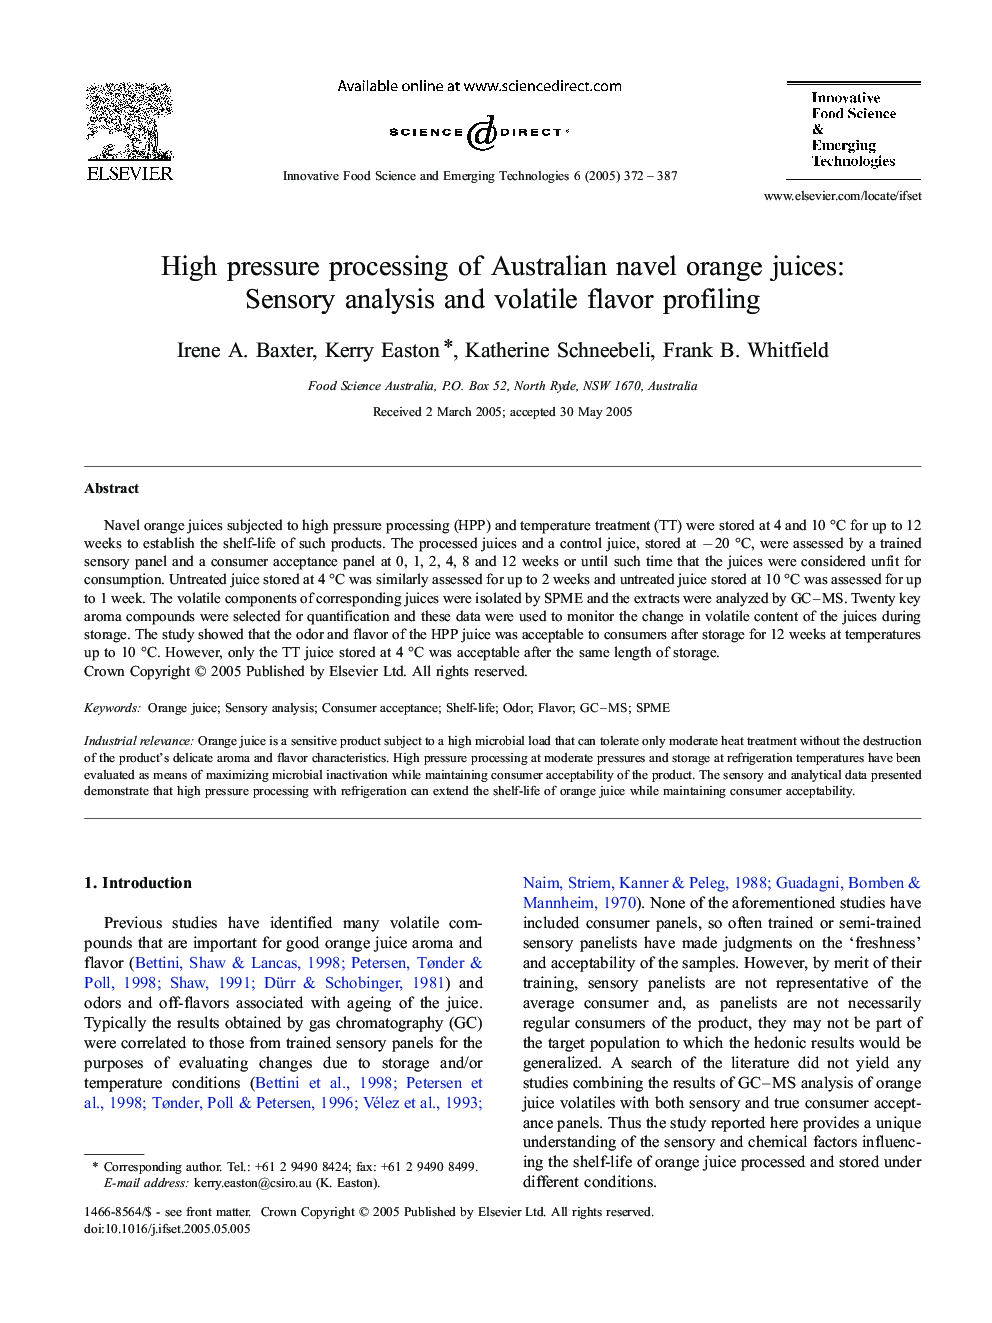 High pressure processing of Australian navel orange juices: Sensory analysis and volatile flavor profiling